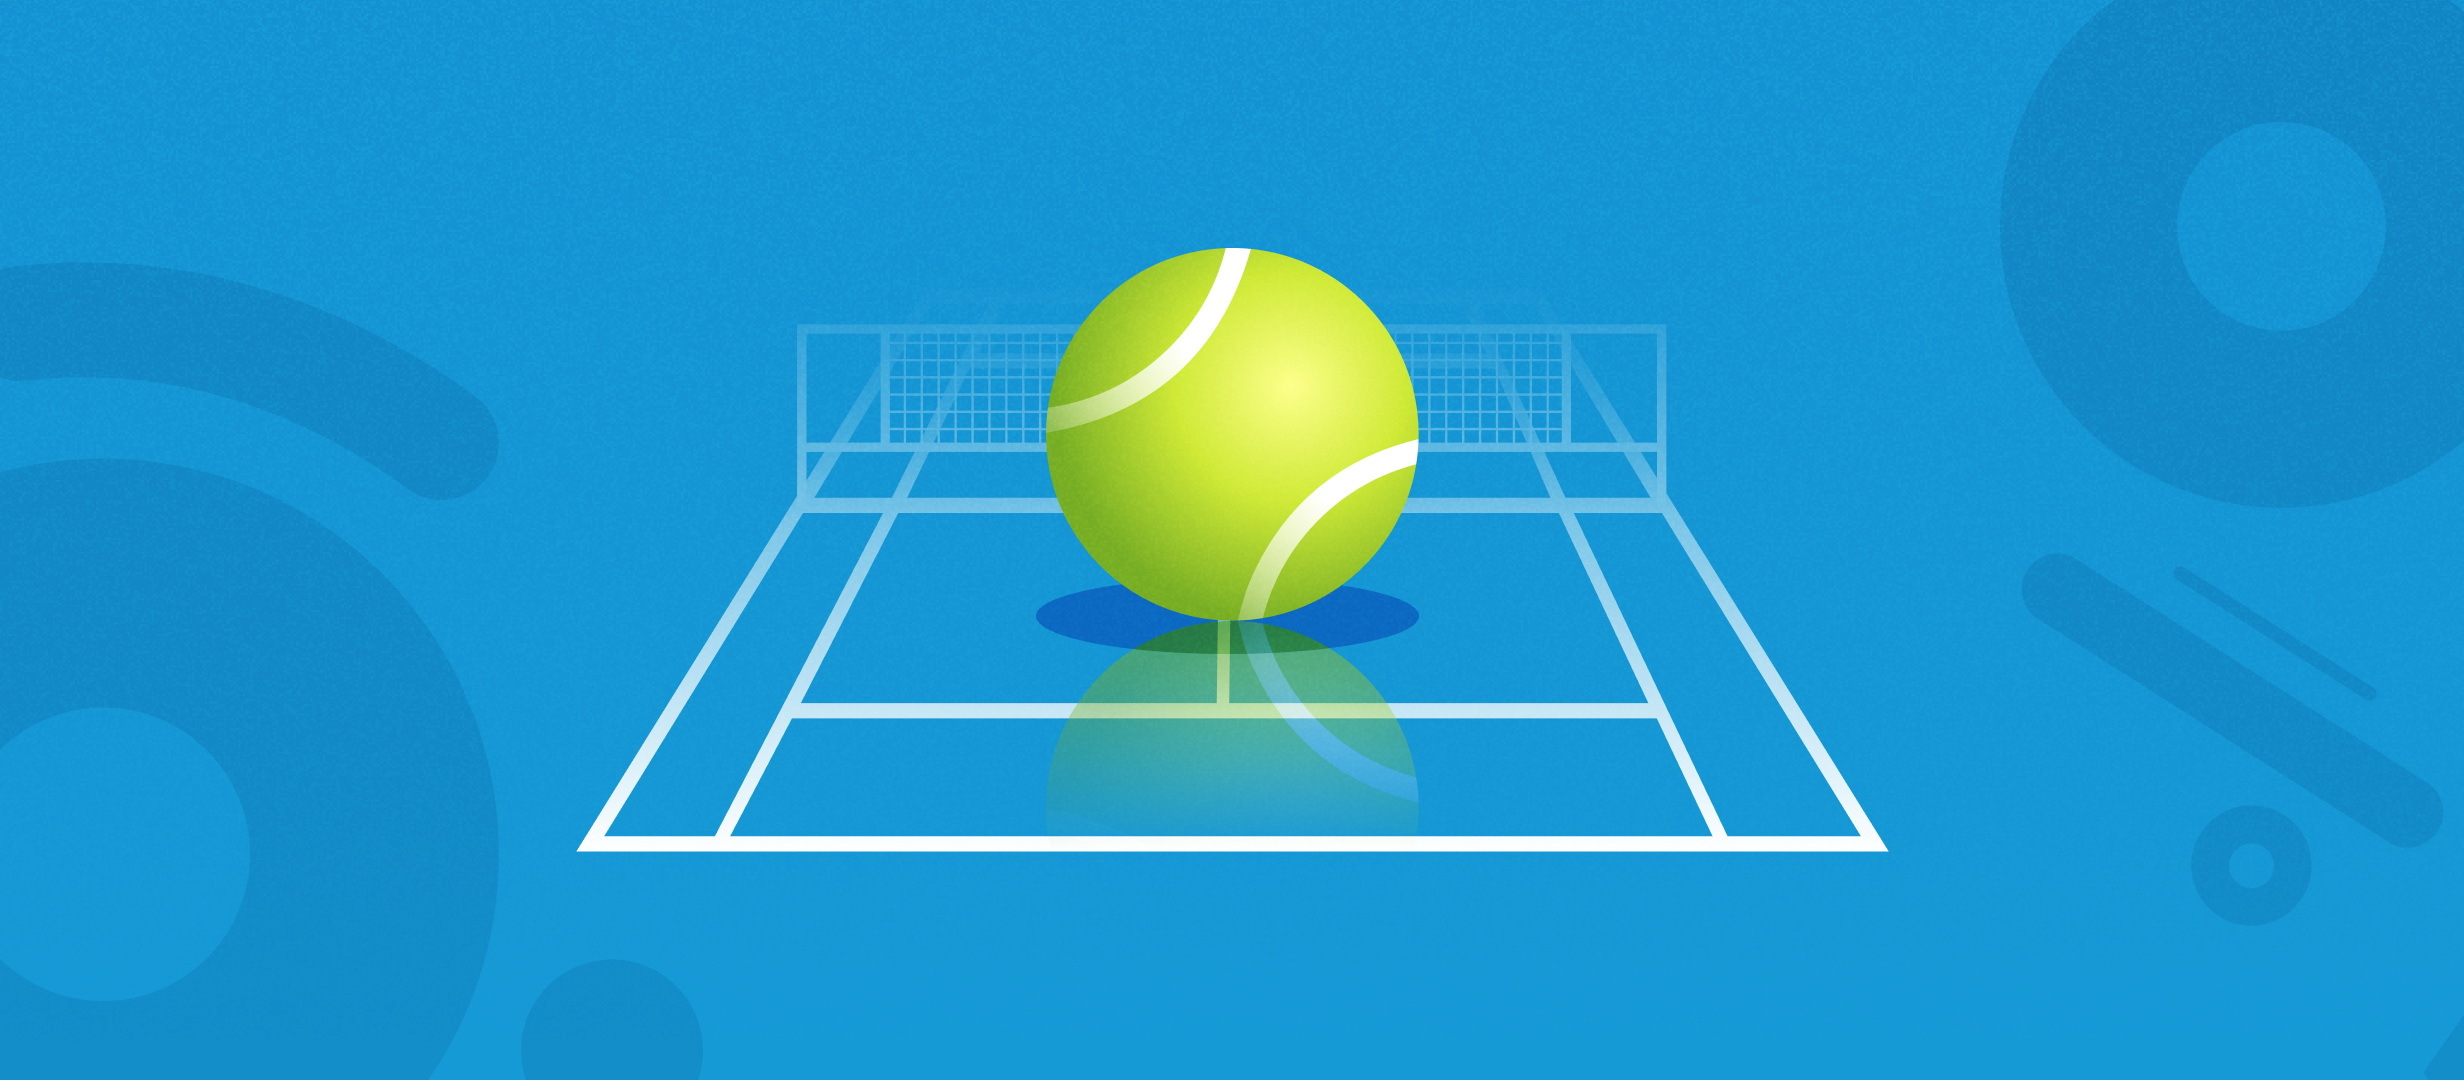 Cand joaca Simona Halep si Sorana Cîrstea in optimi la Australian Open